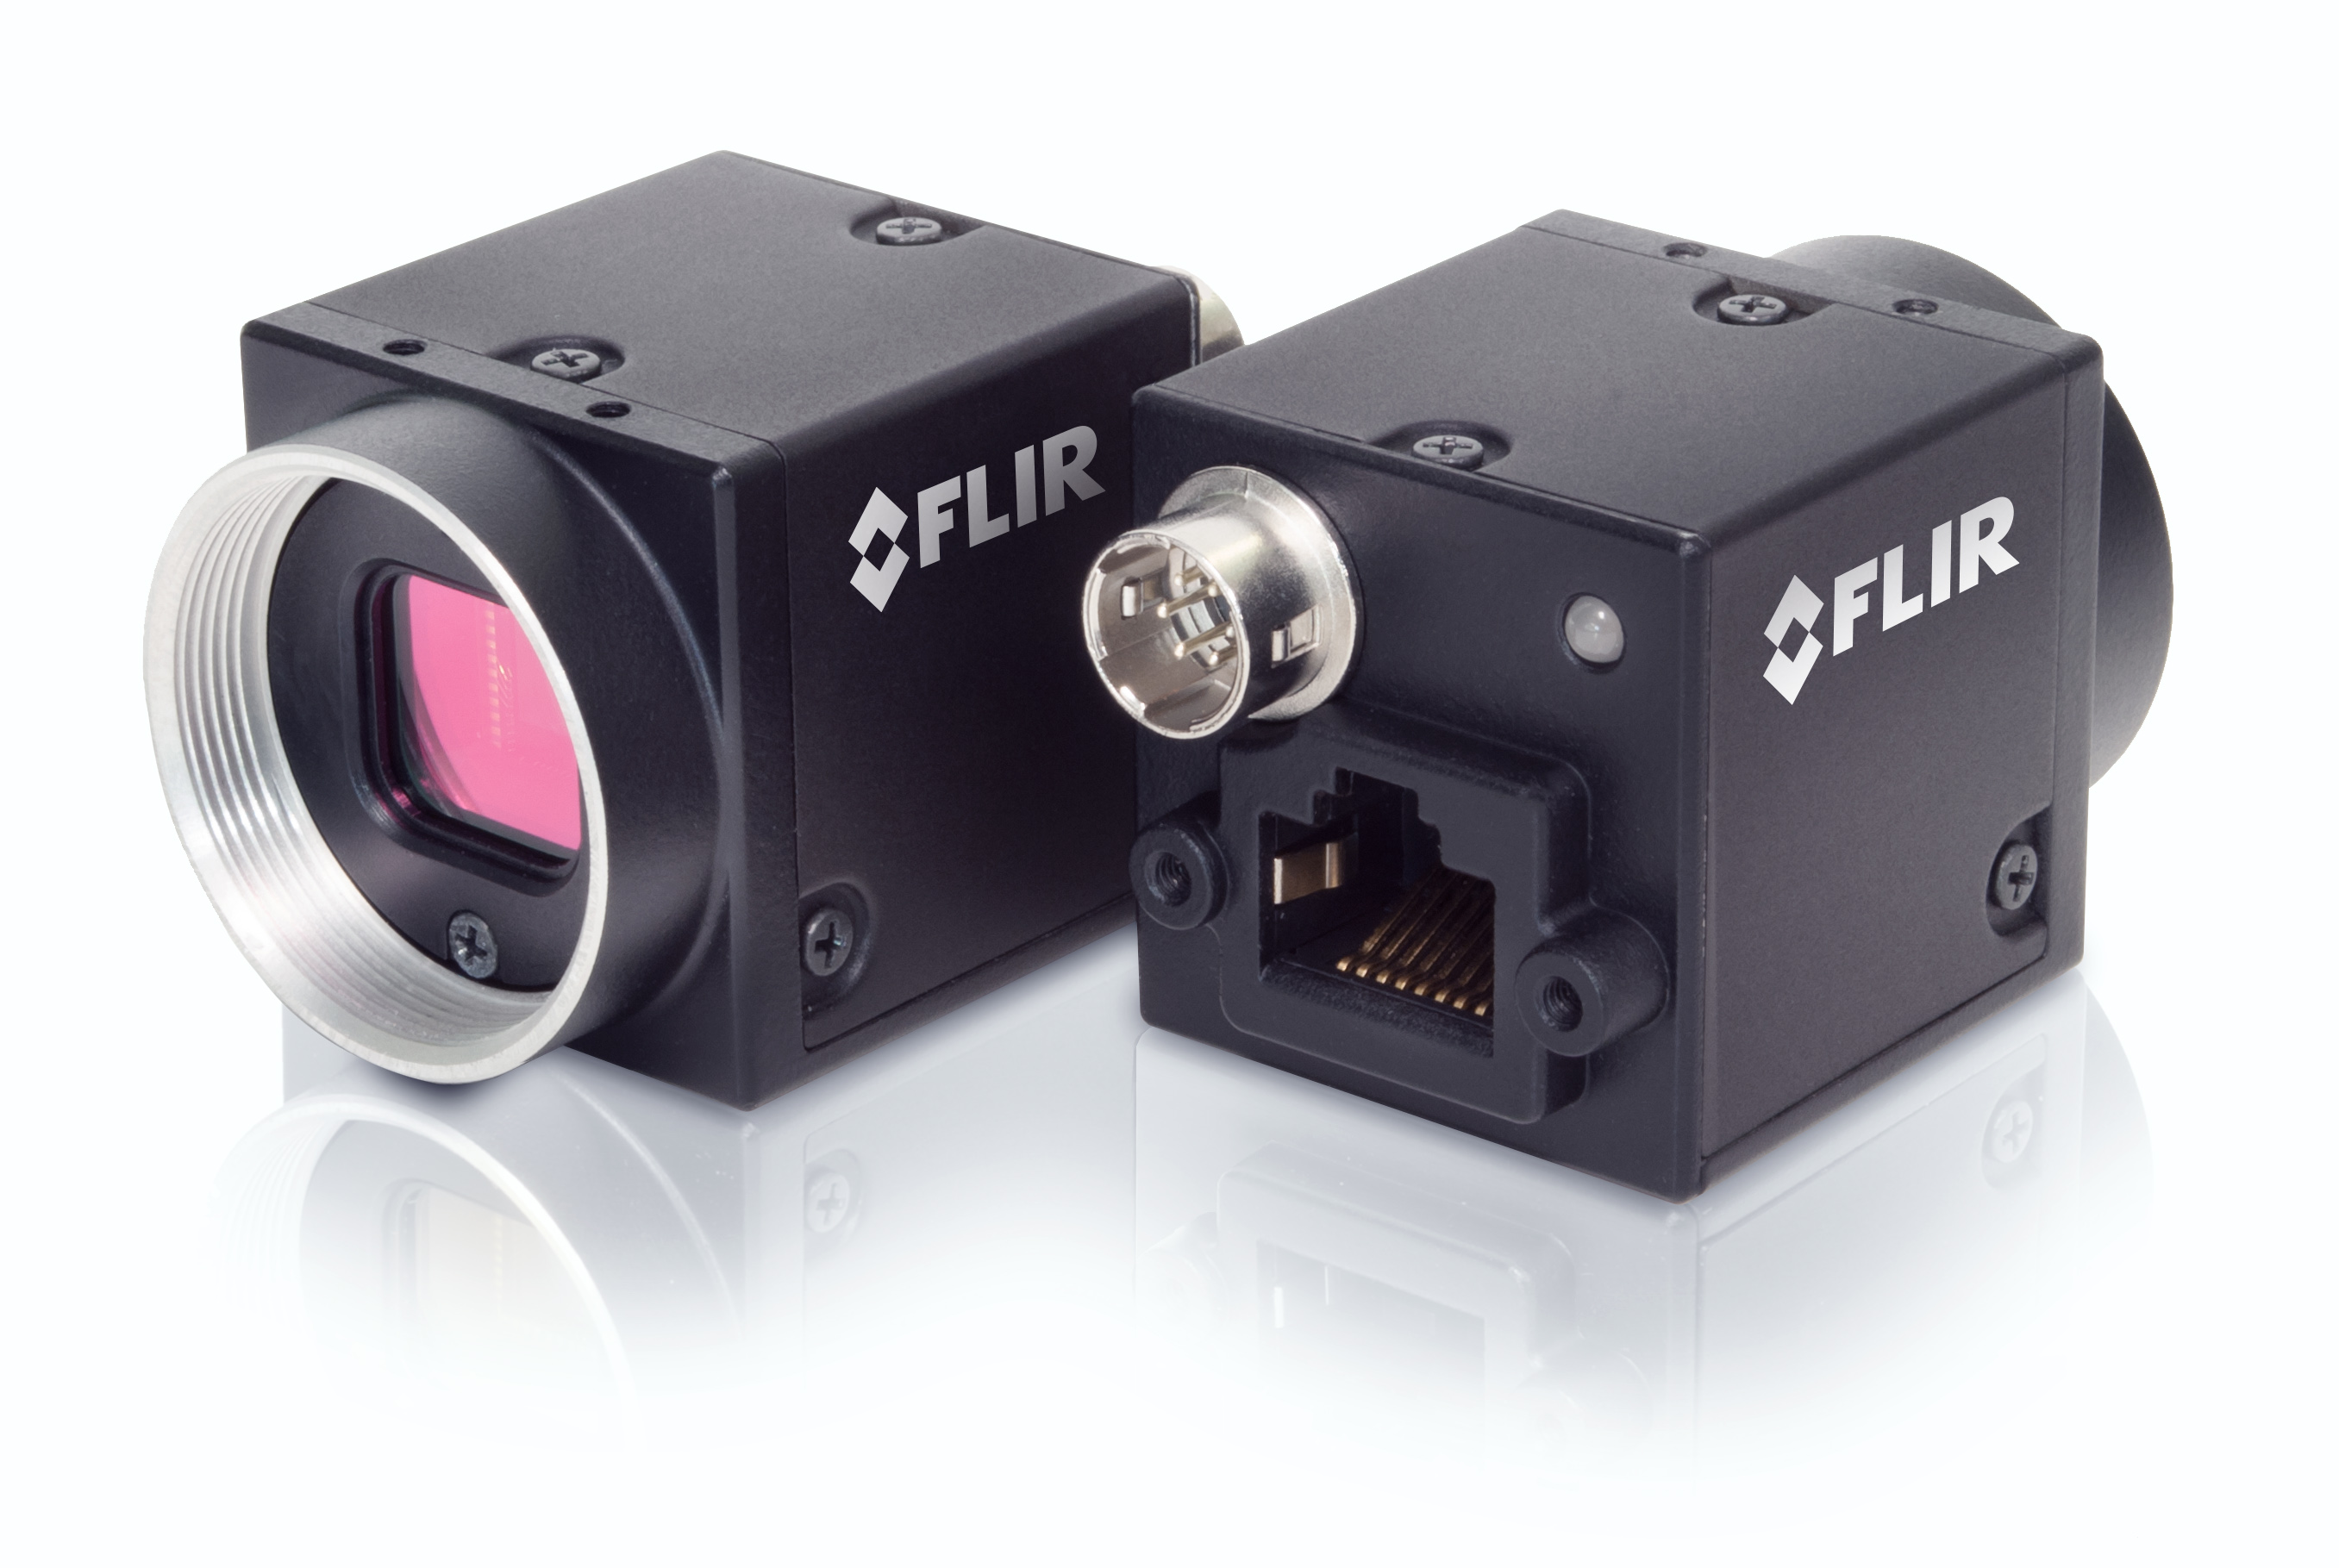 Gigabit Ethernet-based machine vision camera